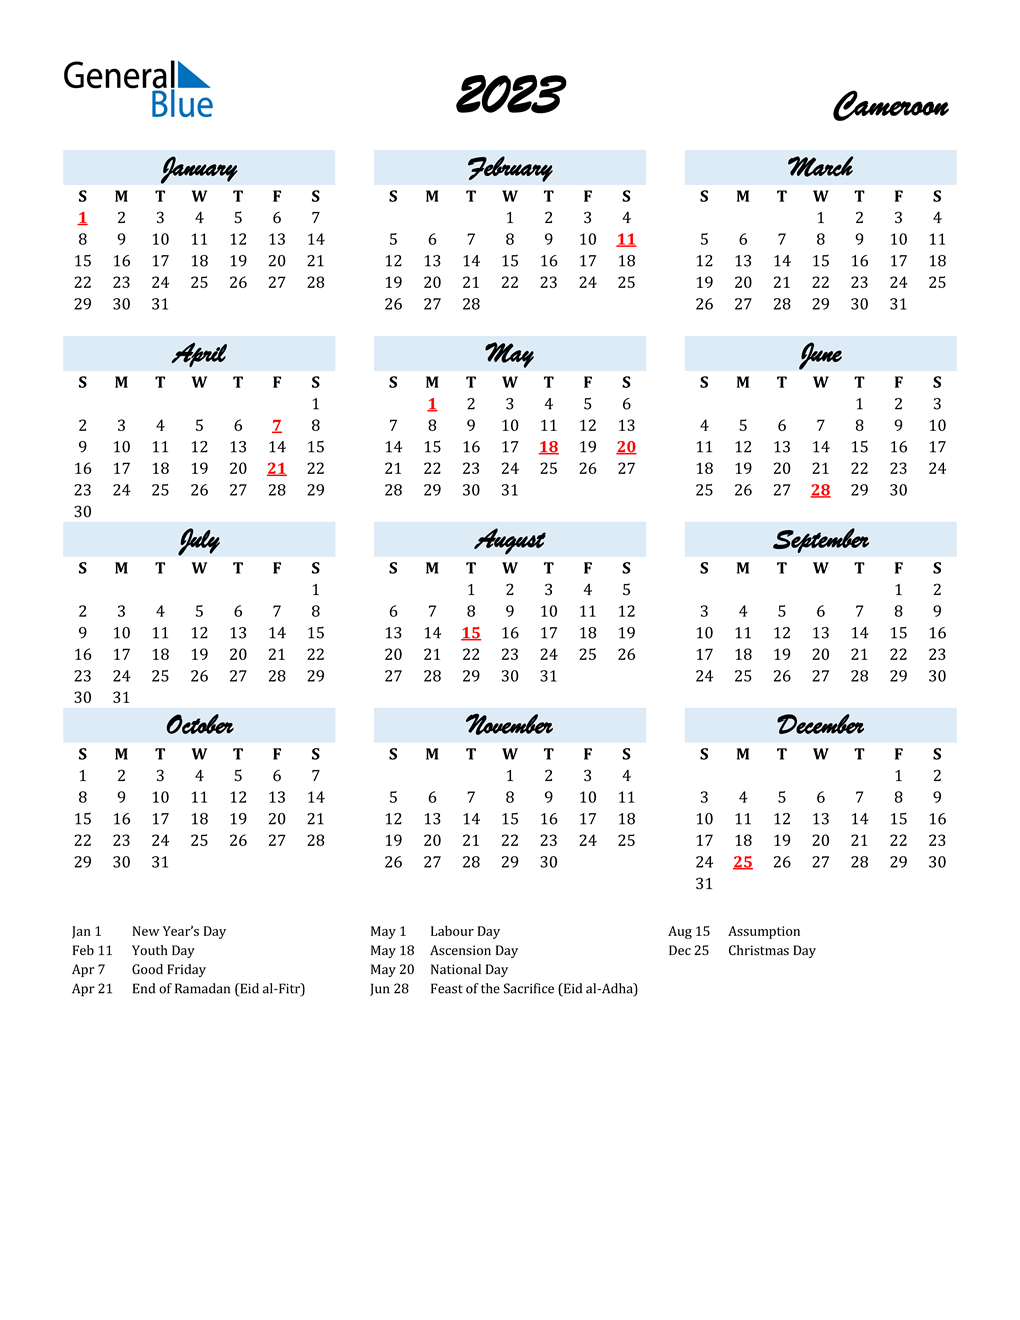 2023 cameroon calendar with holidays